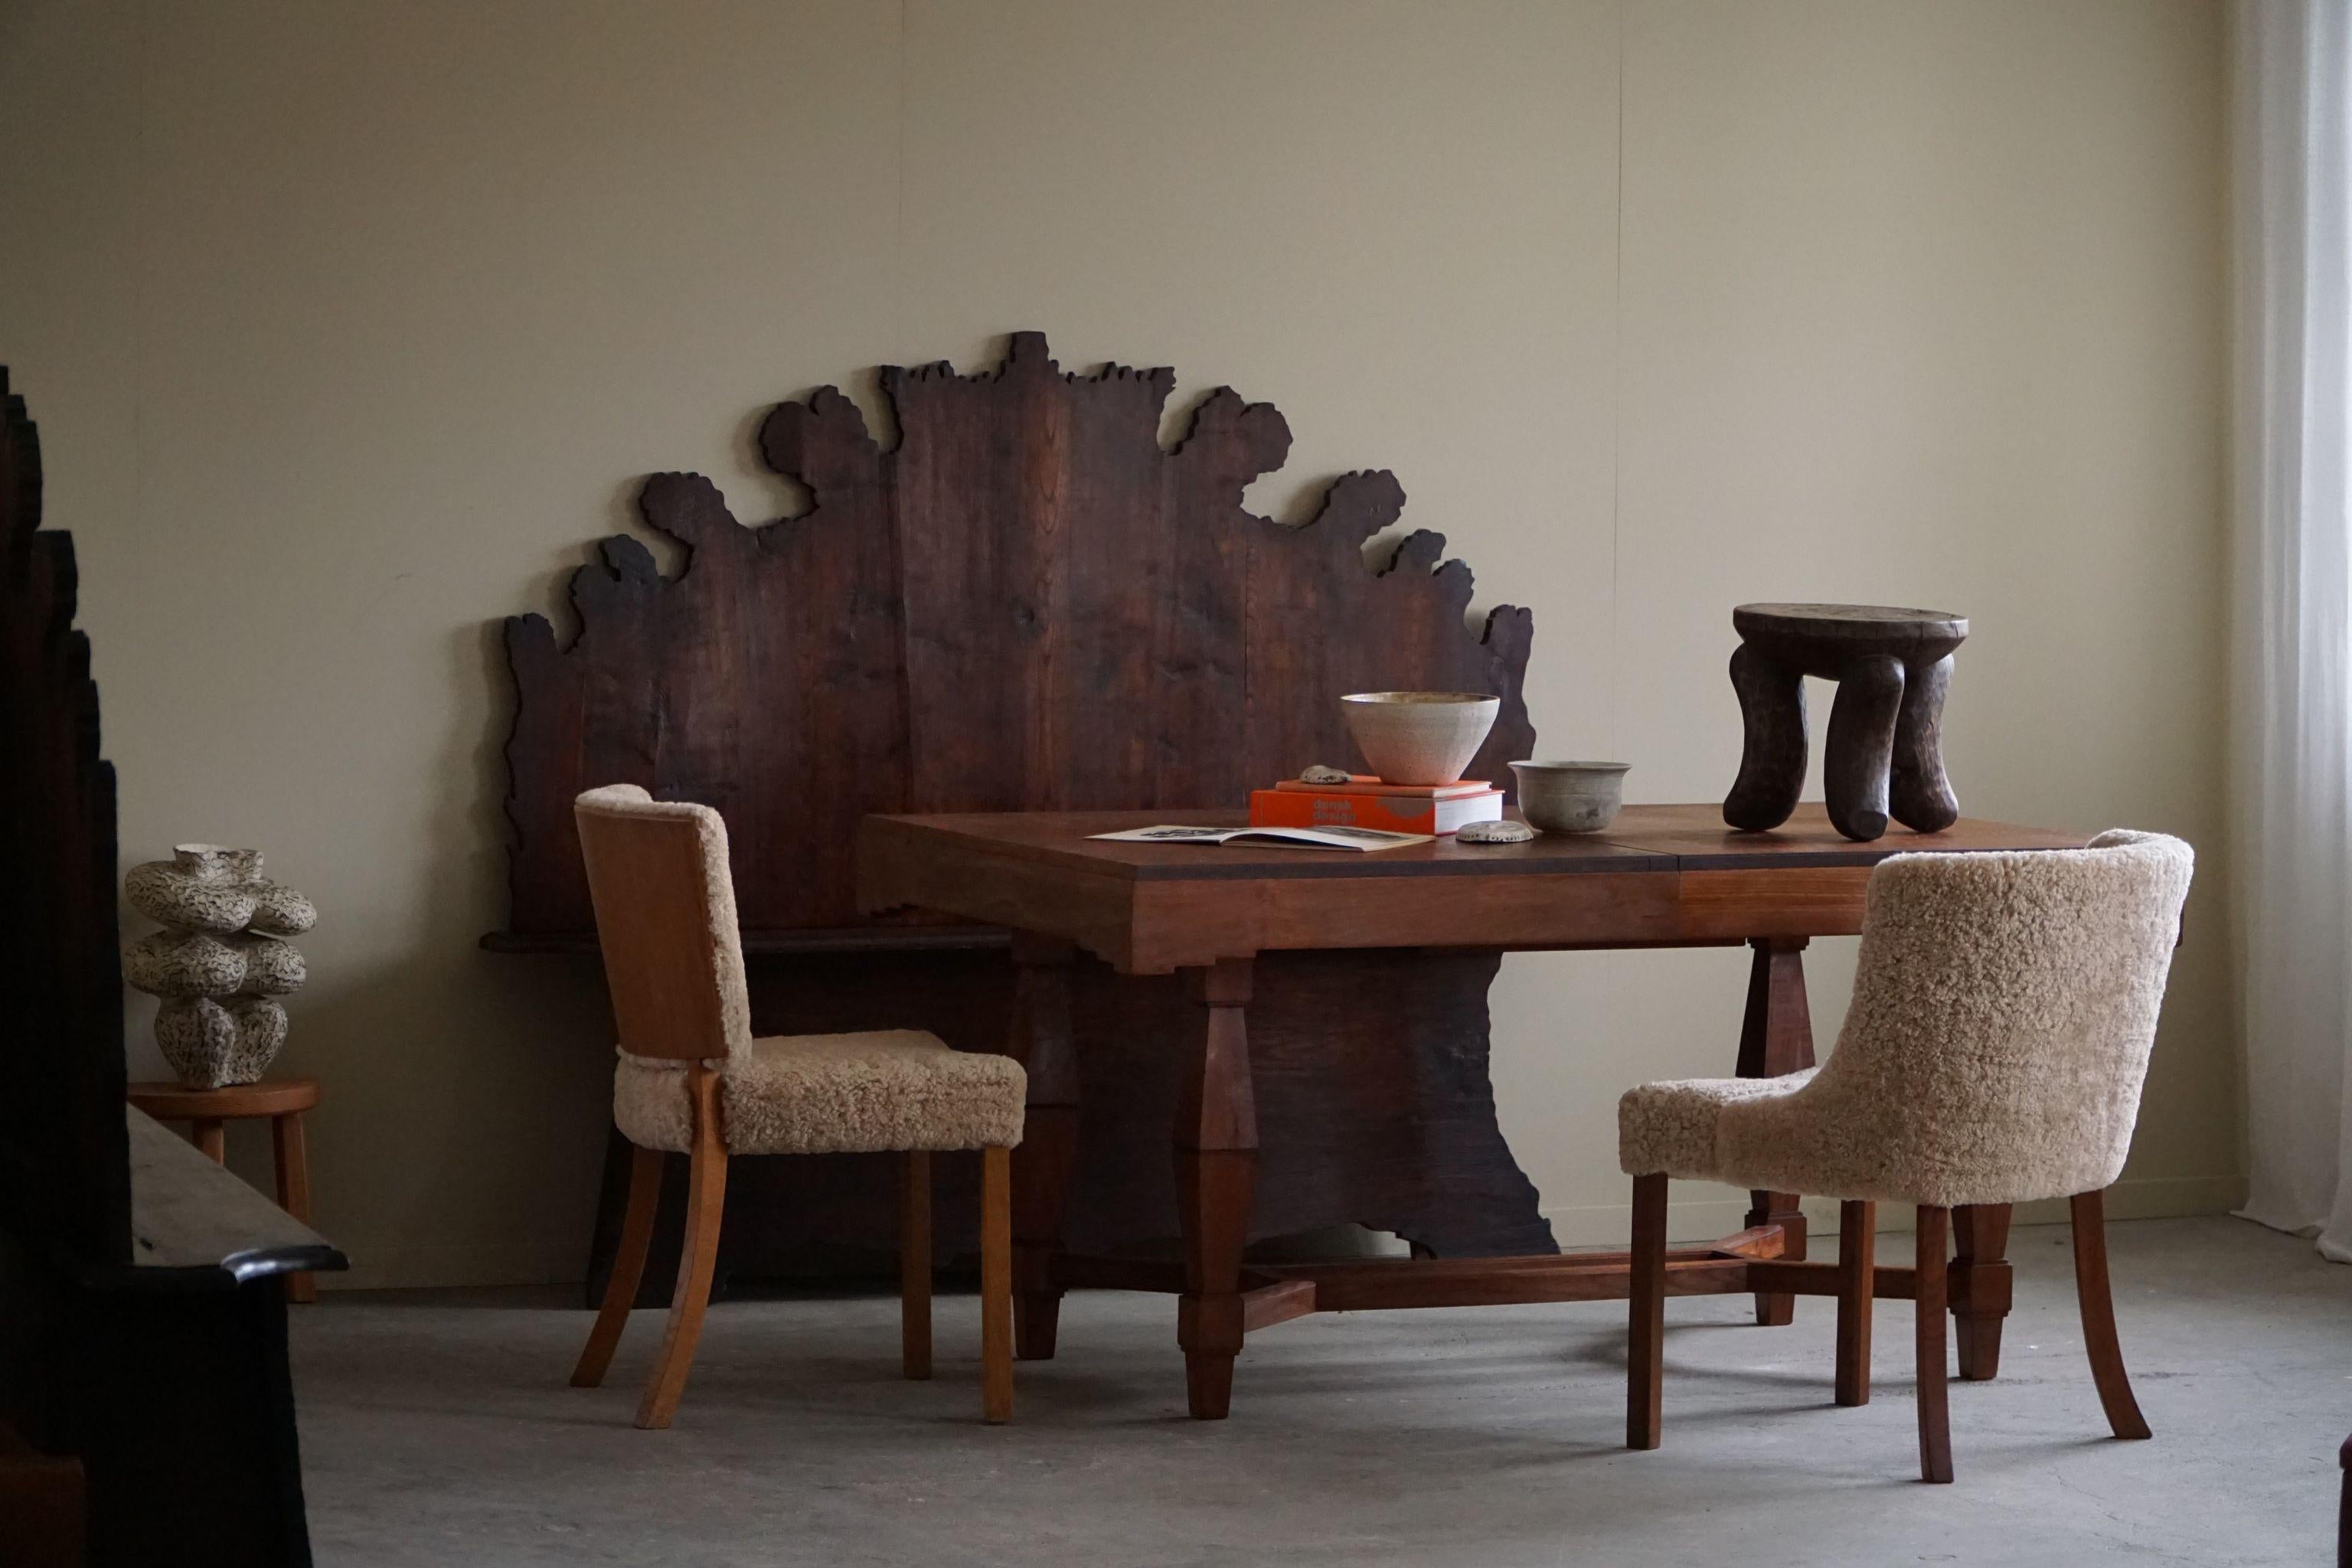 A Pair of Classic Chairs in Oak and Lambswool, Danish Modern, Kaj Gottlob, 1950s For Sale 3